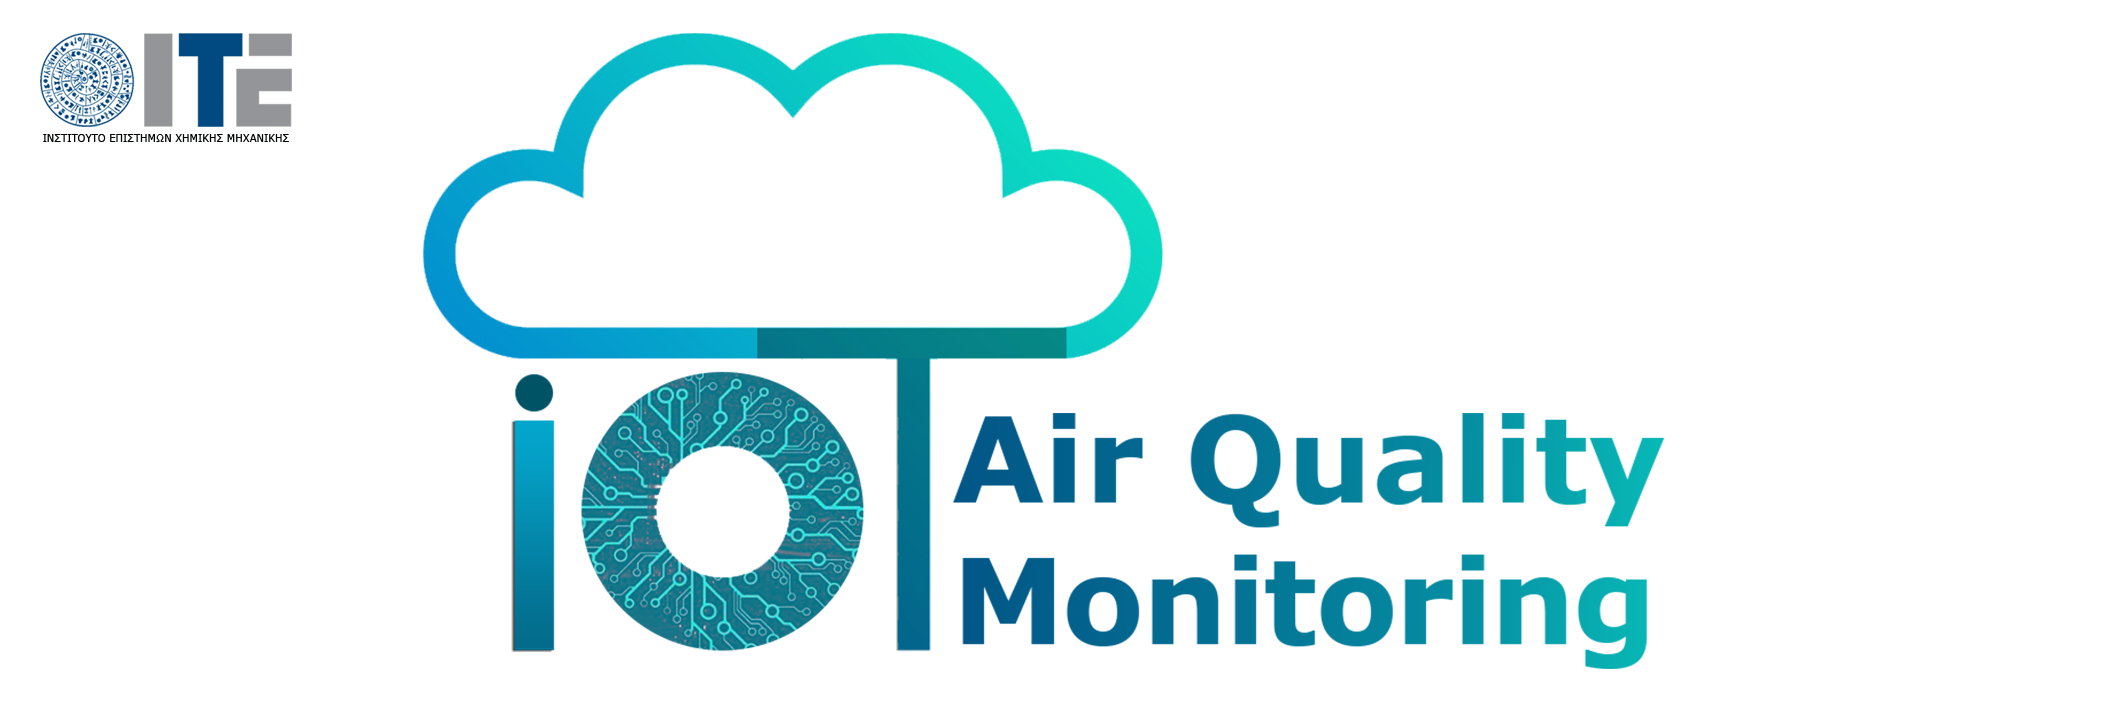 Air Quality Monitoring